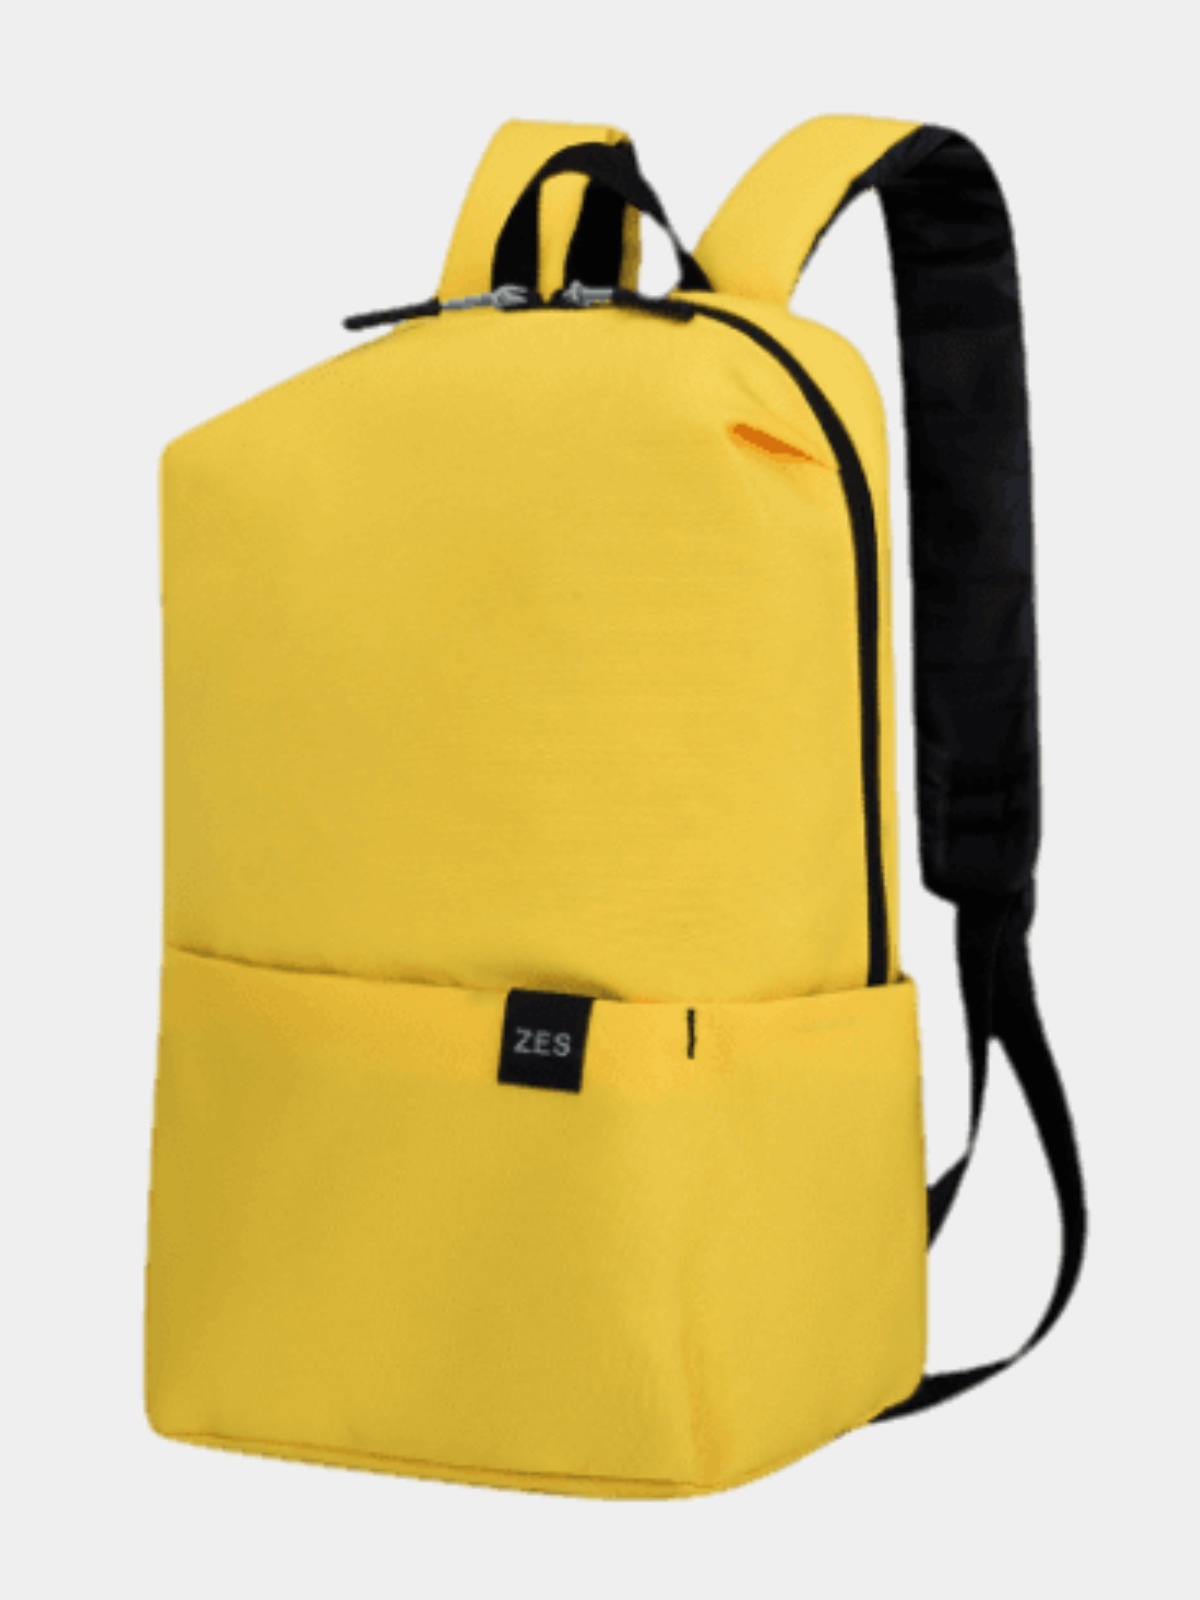 Рюкзак унисекс 2ChC10 желтый, 43х28х15 см